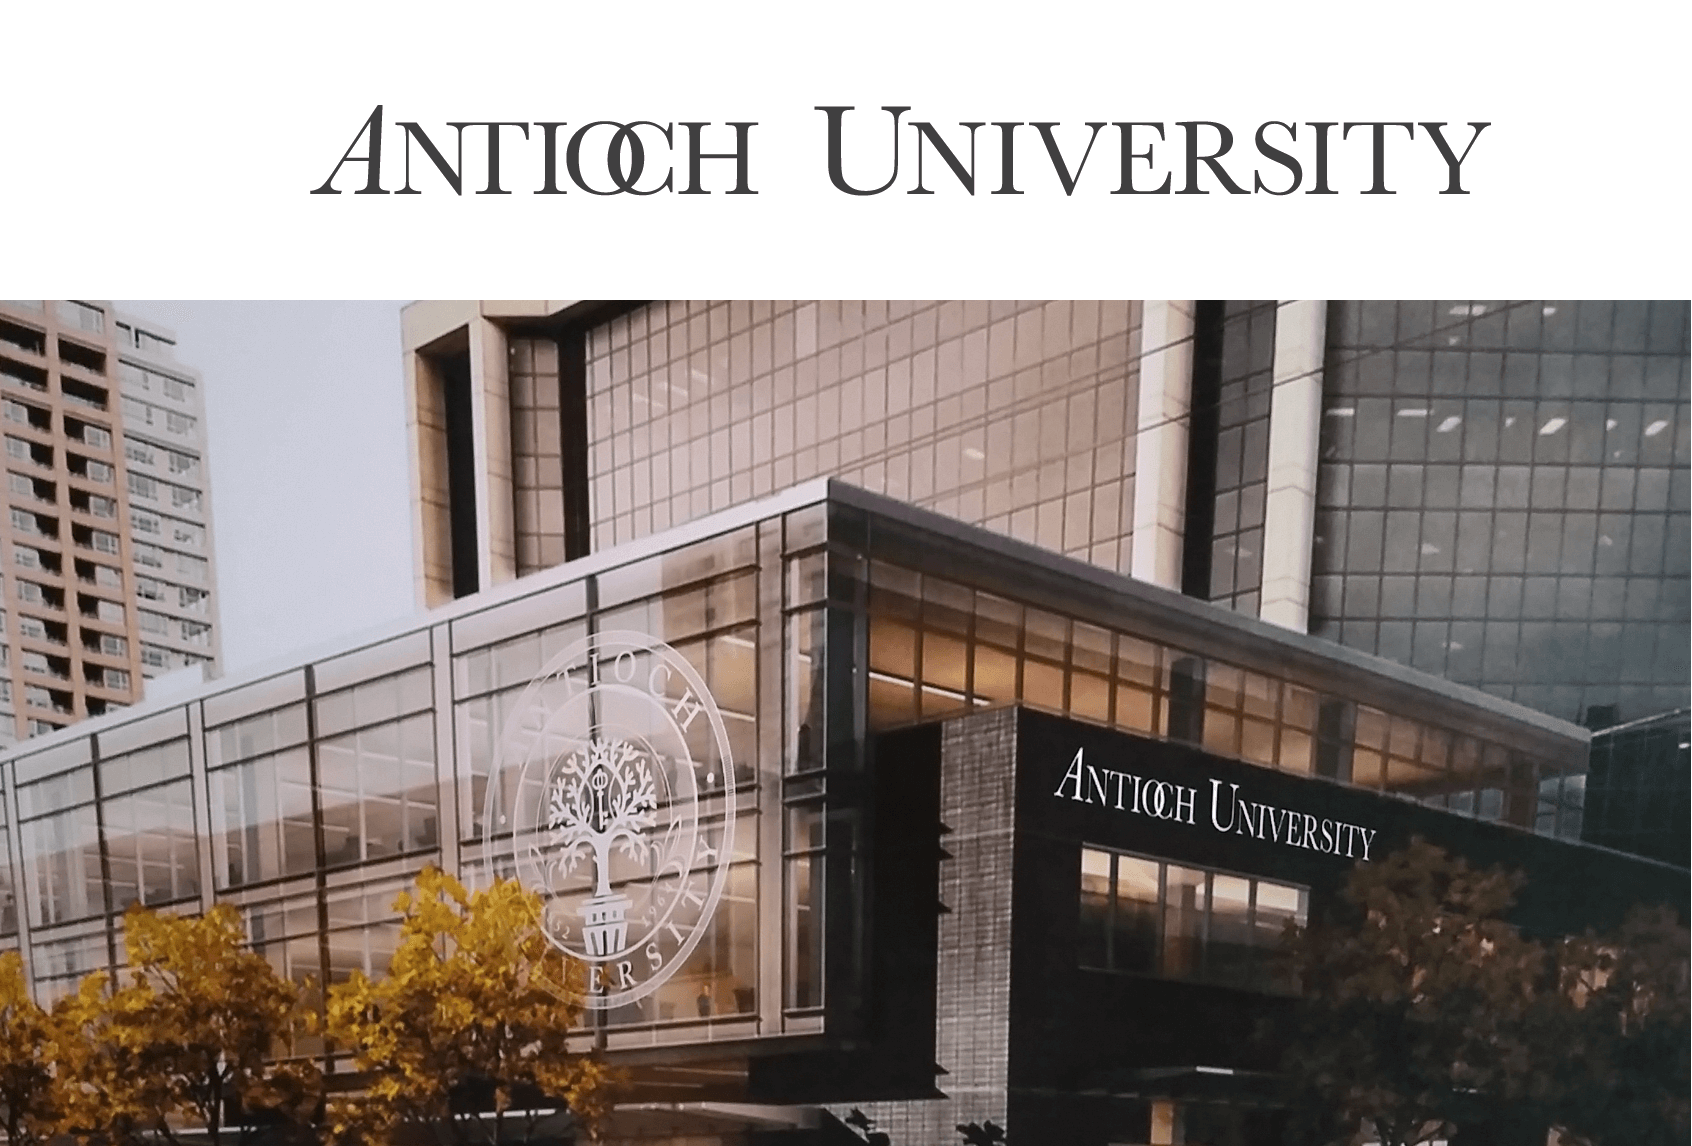 Antioch university